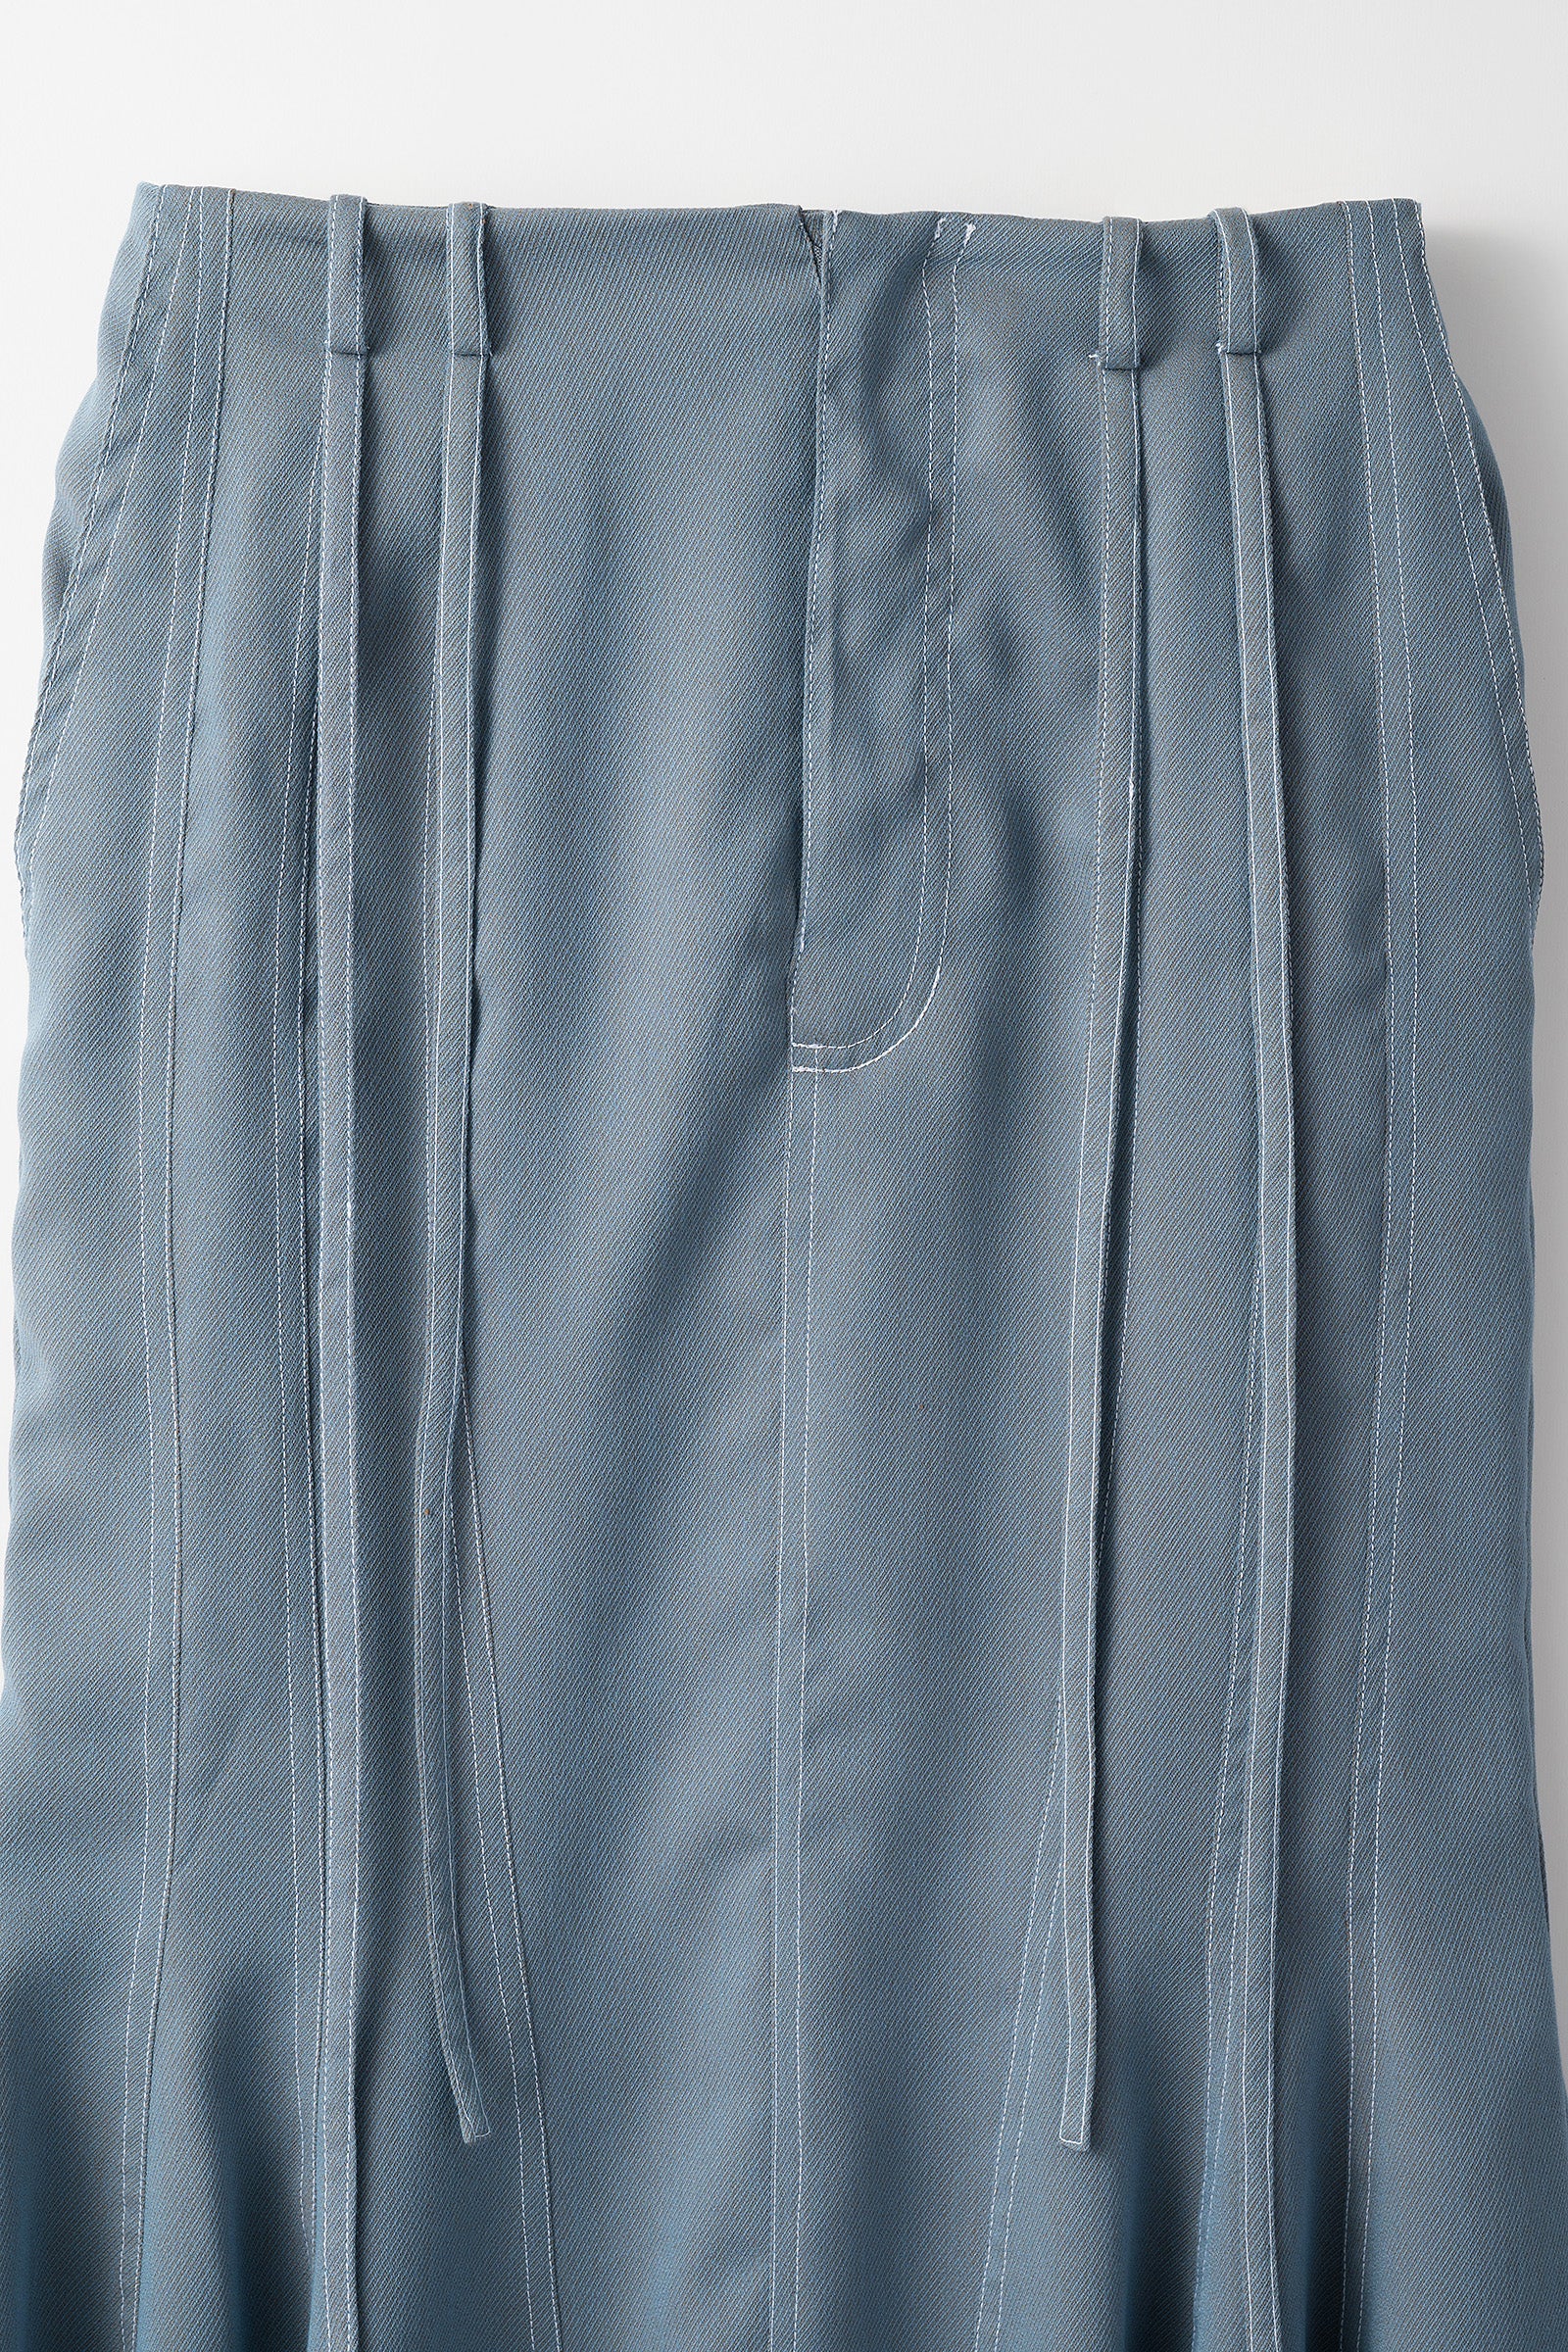 Umbrella mermaid skirt (Chambray blue)